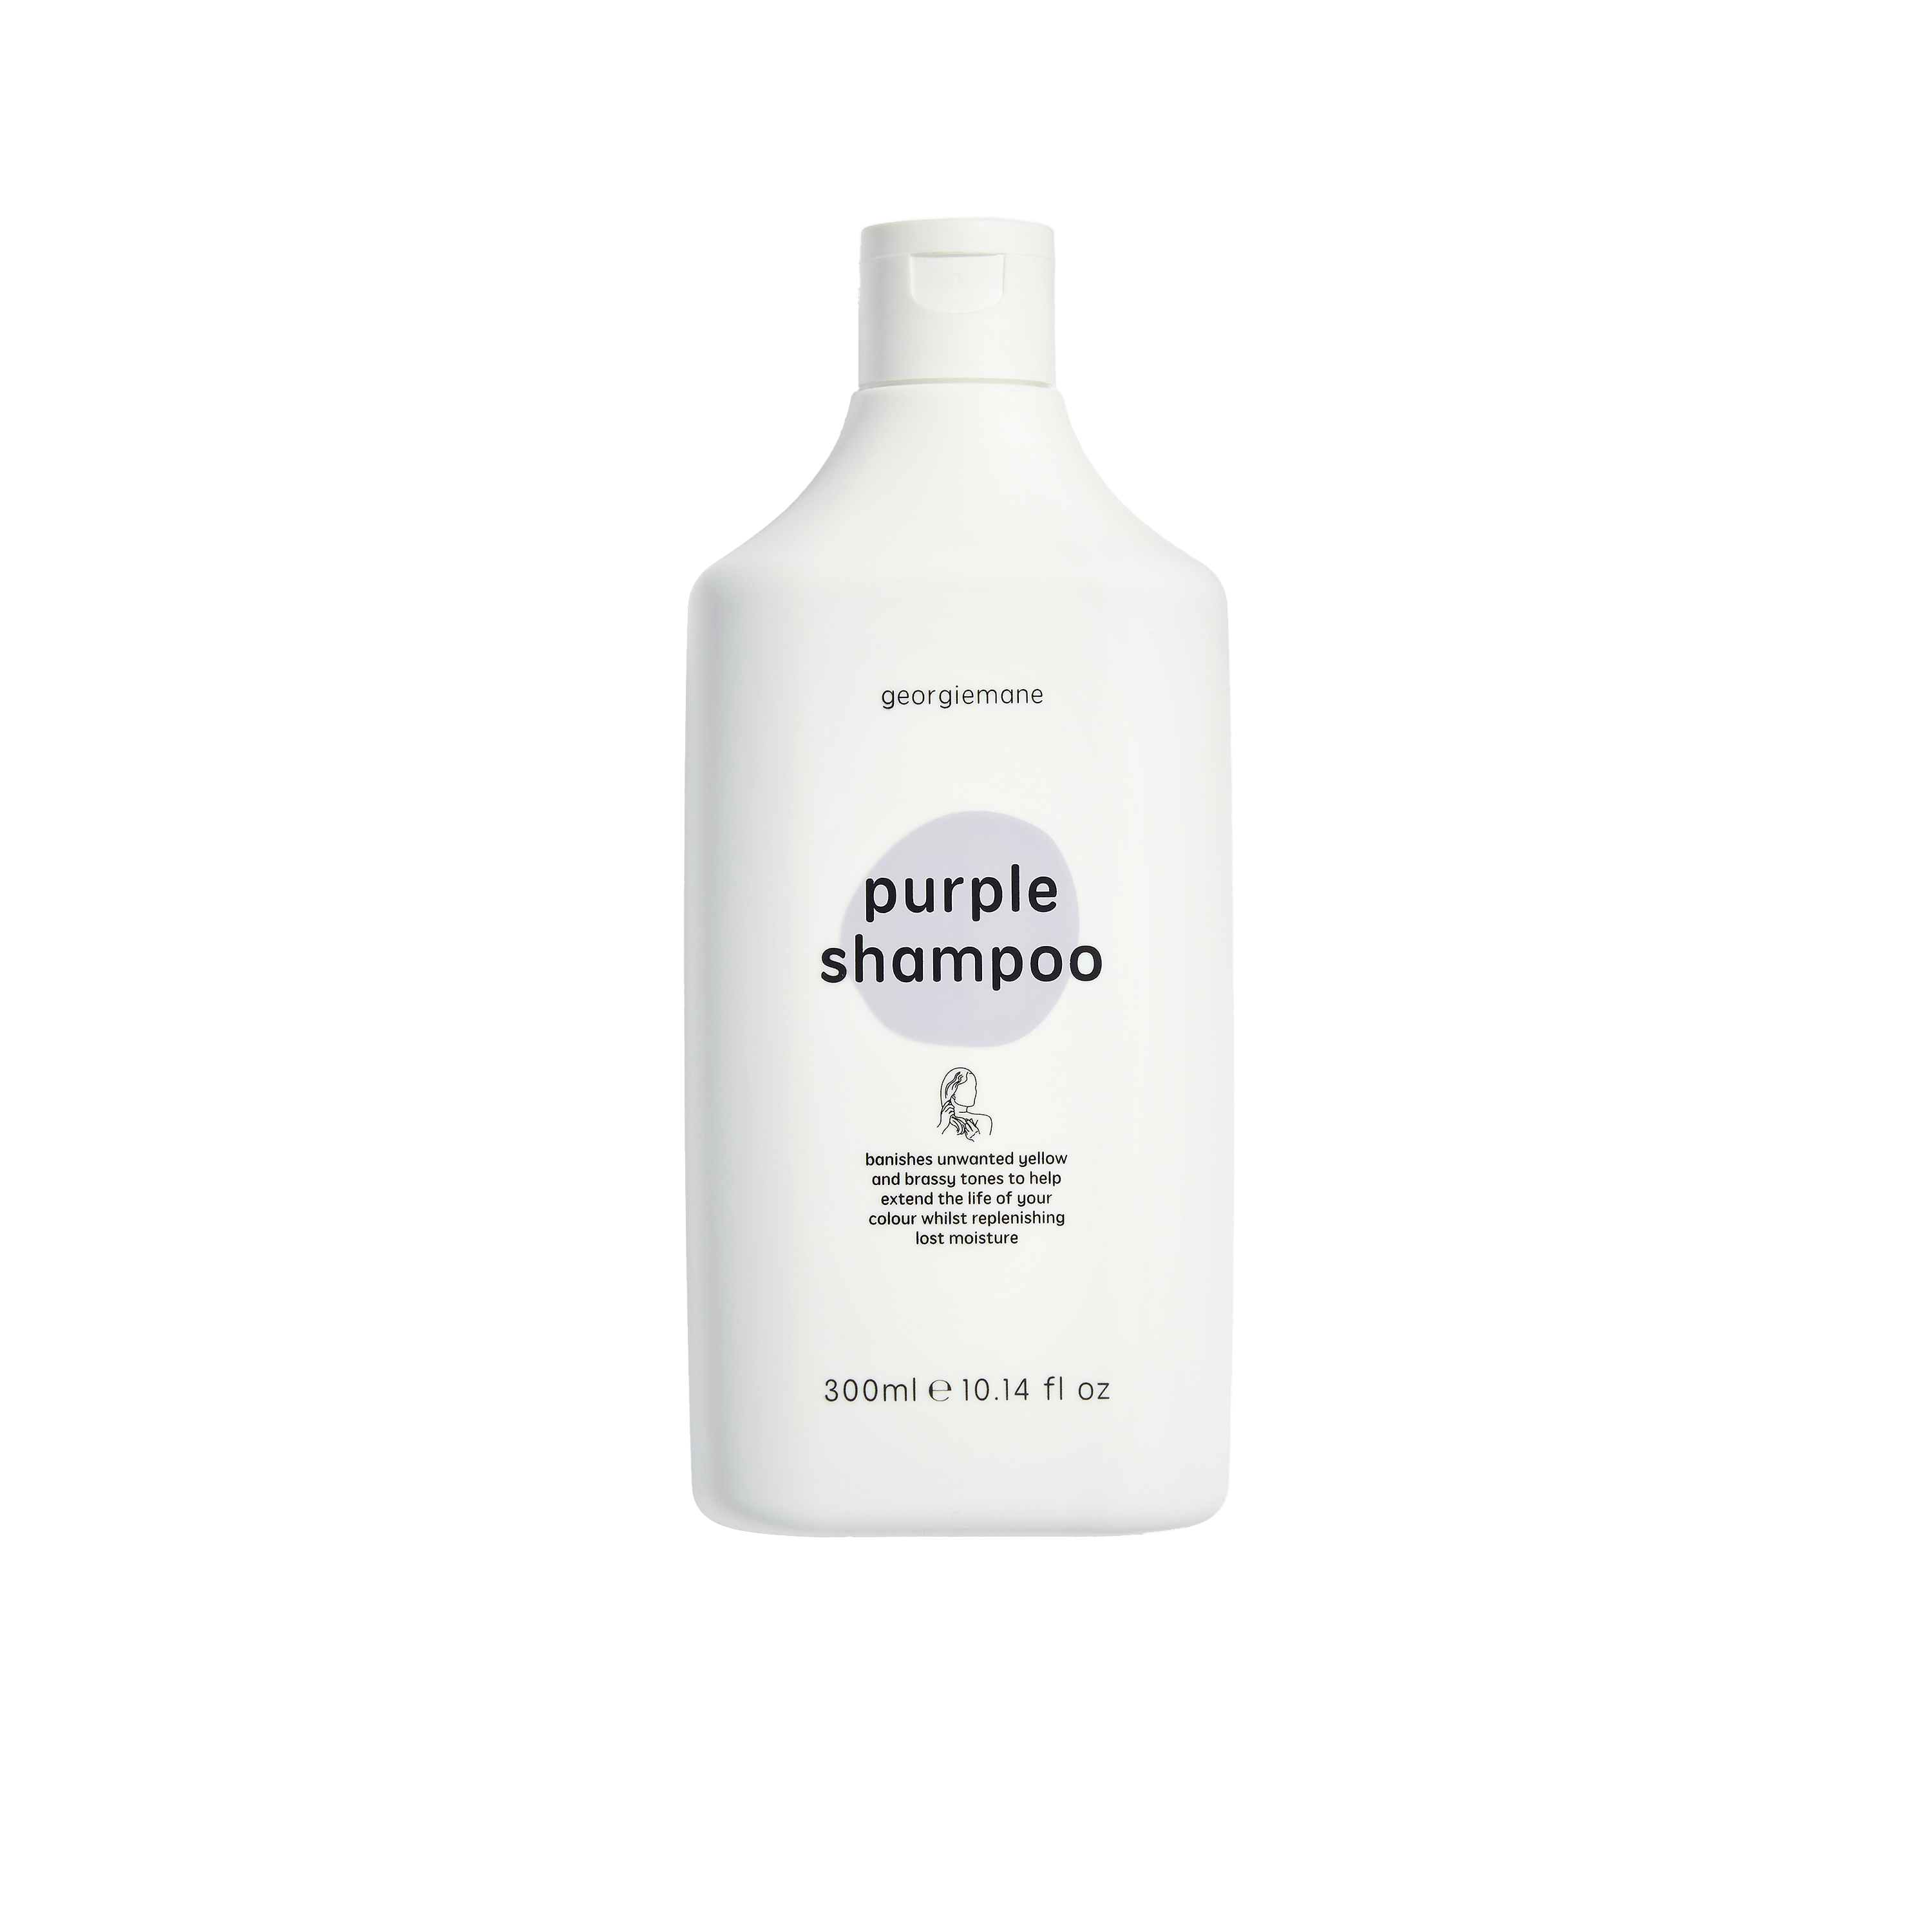 Georgiemane Purple Shampoo 300ml